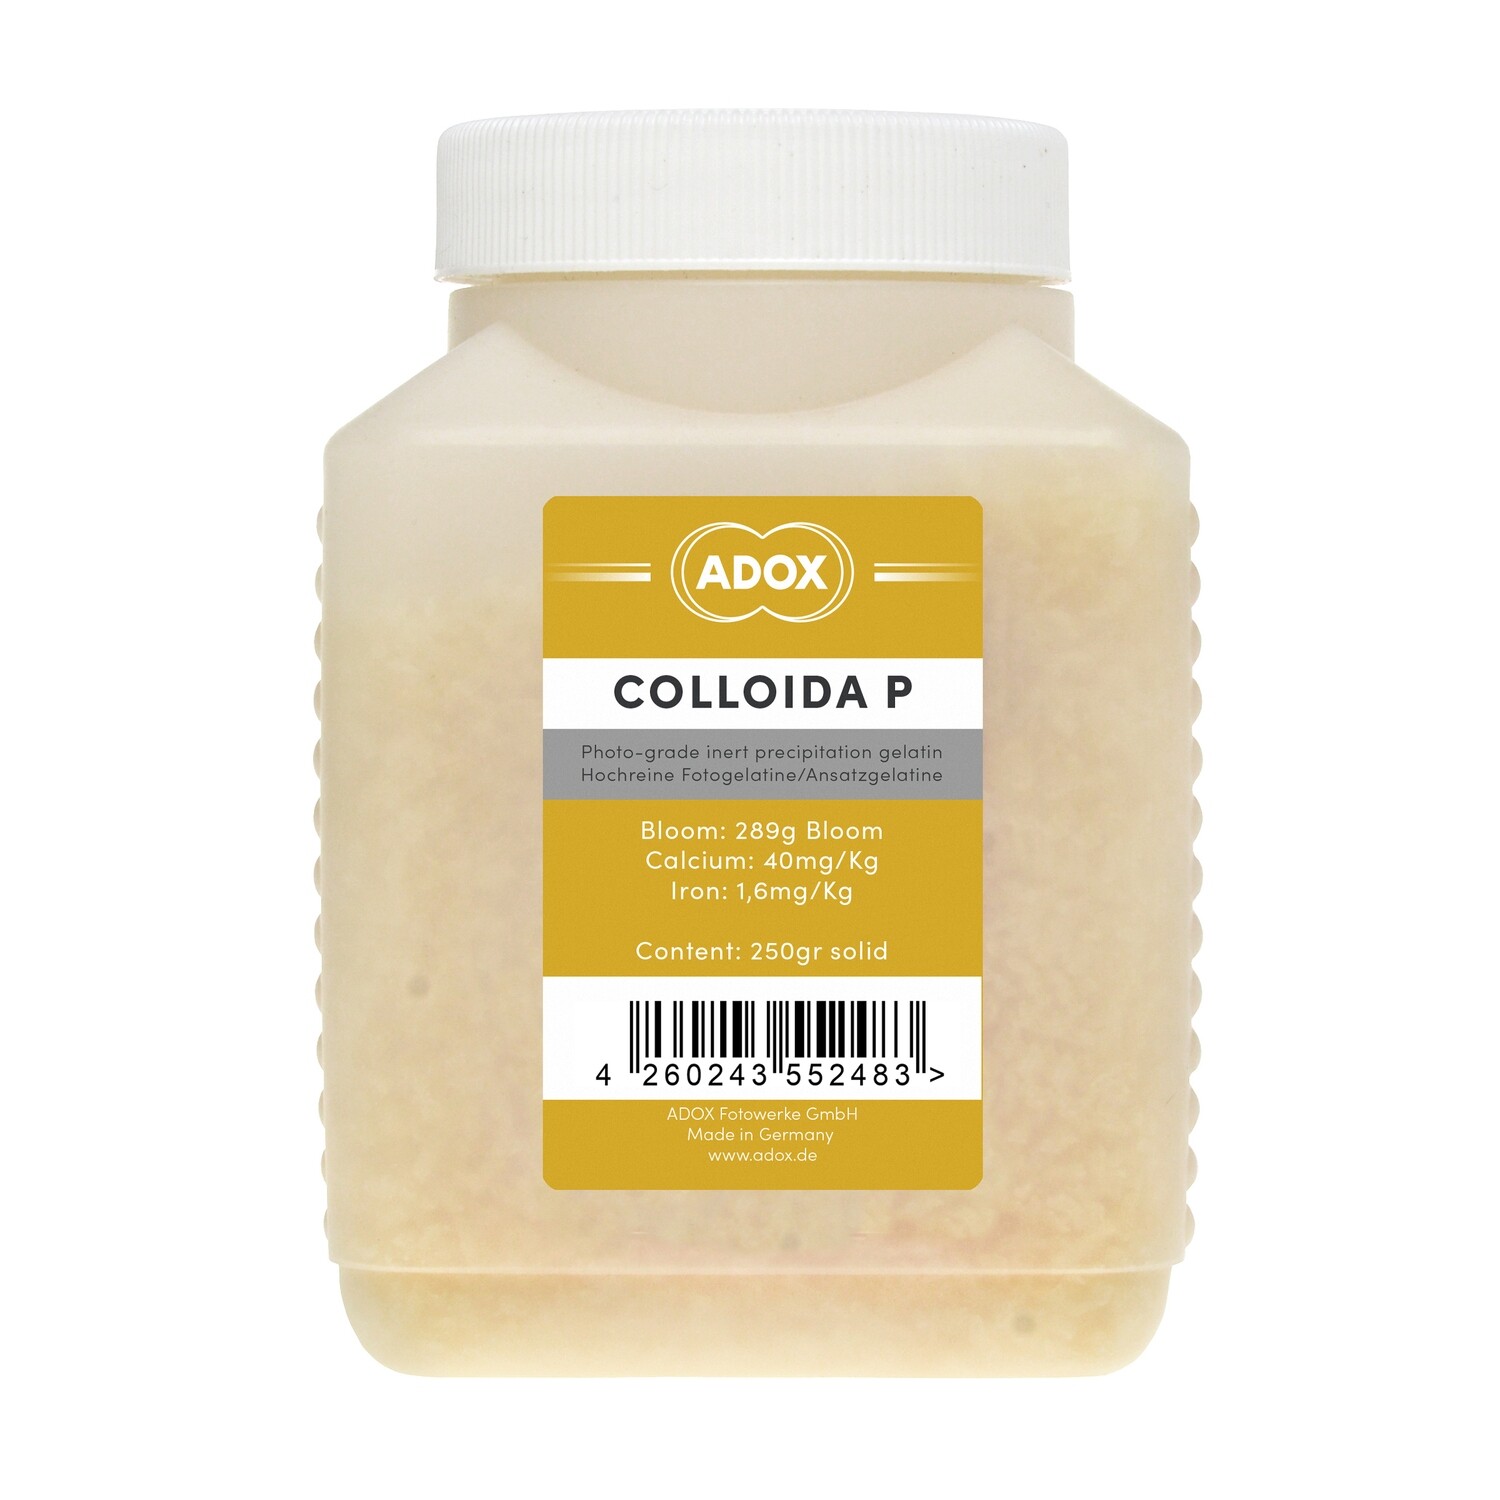 ADOX COLLOIDA P Preparation gelatine 250g non-sensitised